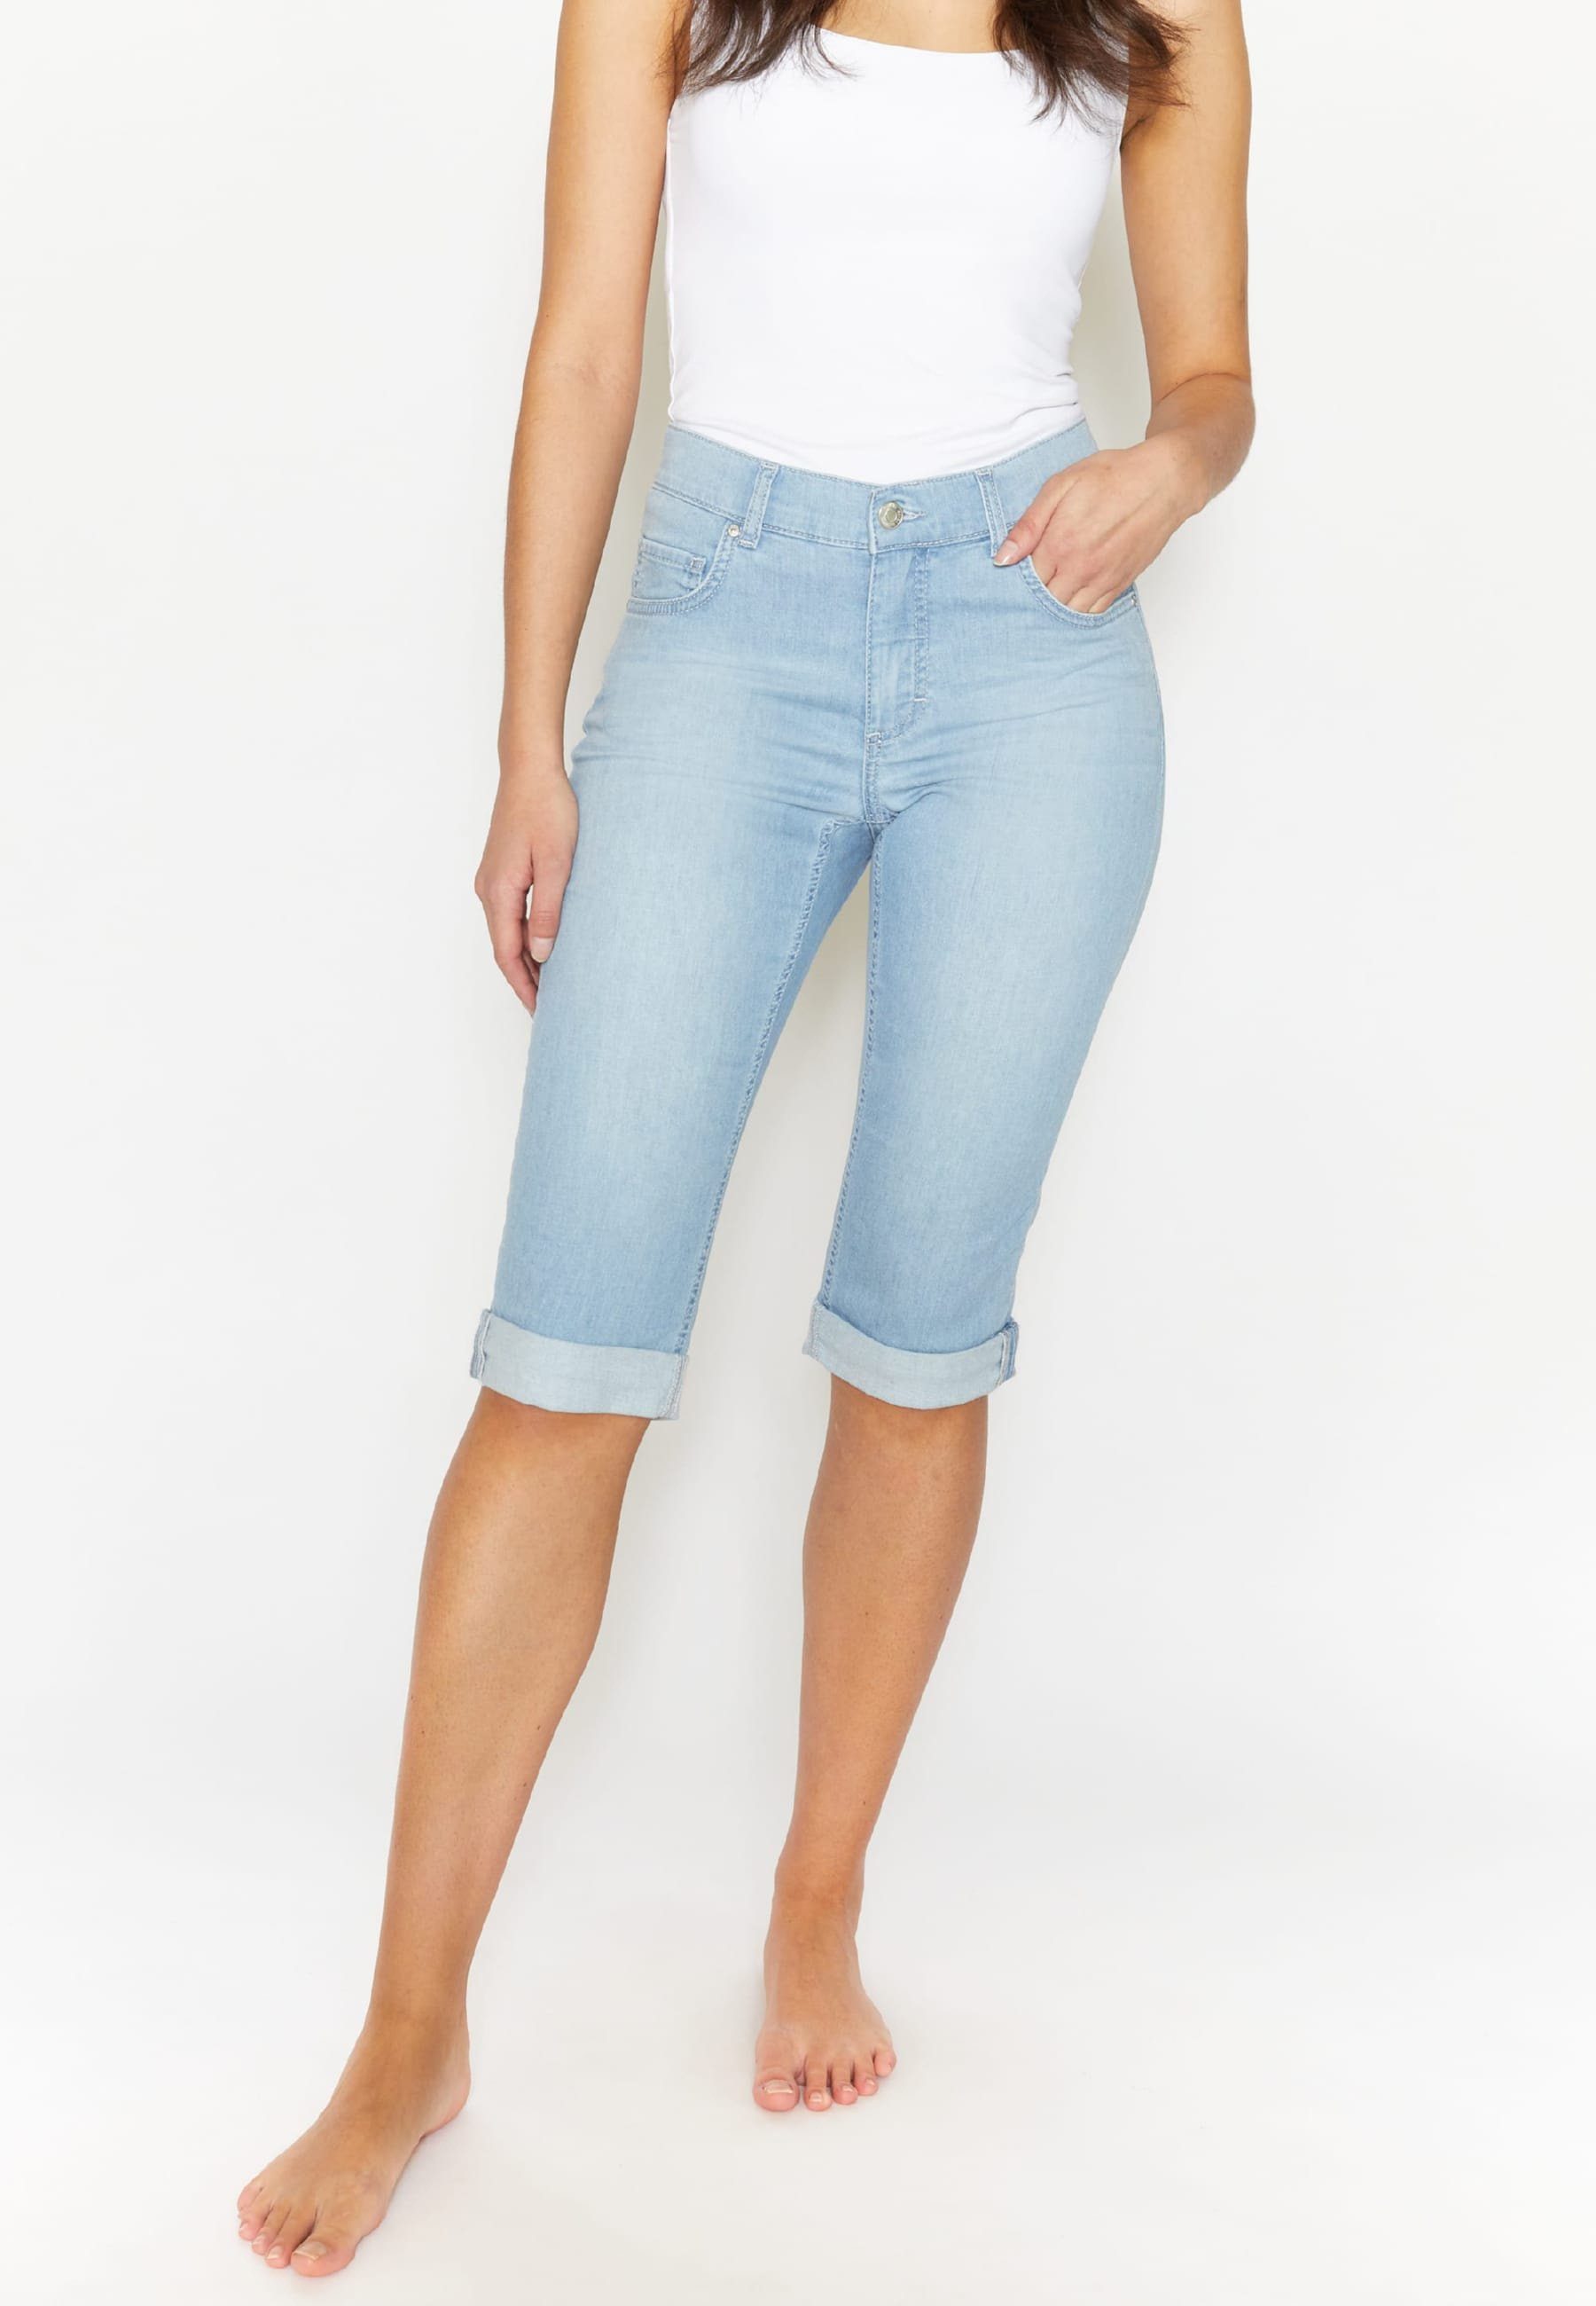 5-Pocket-Jeans mit Jeans Label-Applikationen hellblau TU Capri Used-Look ANGELS mit